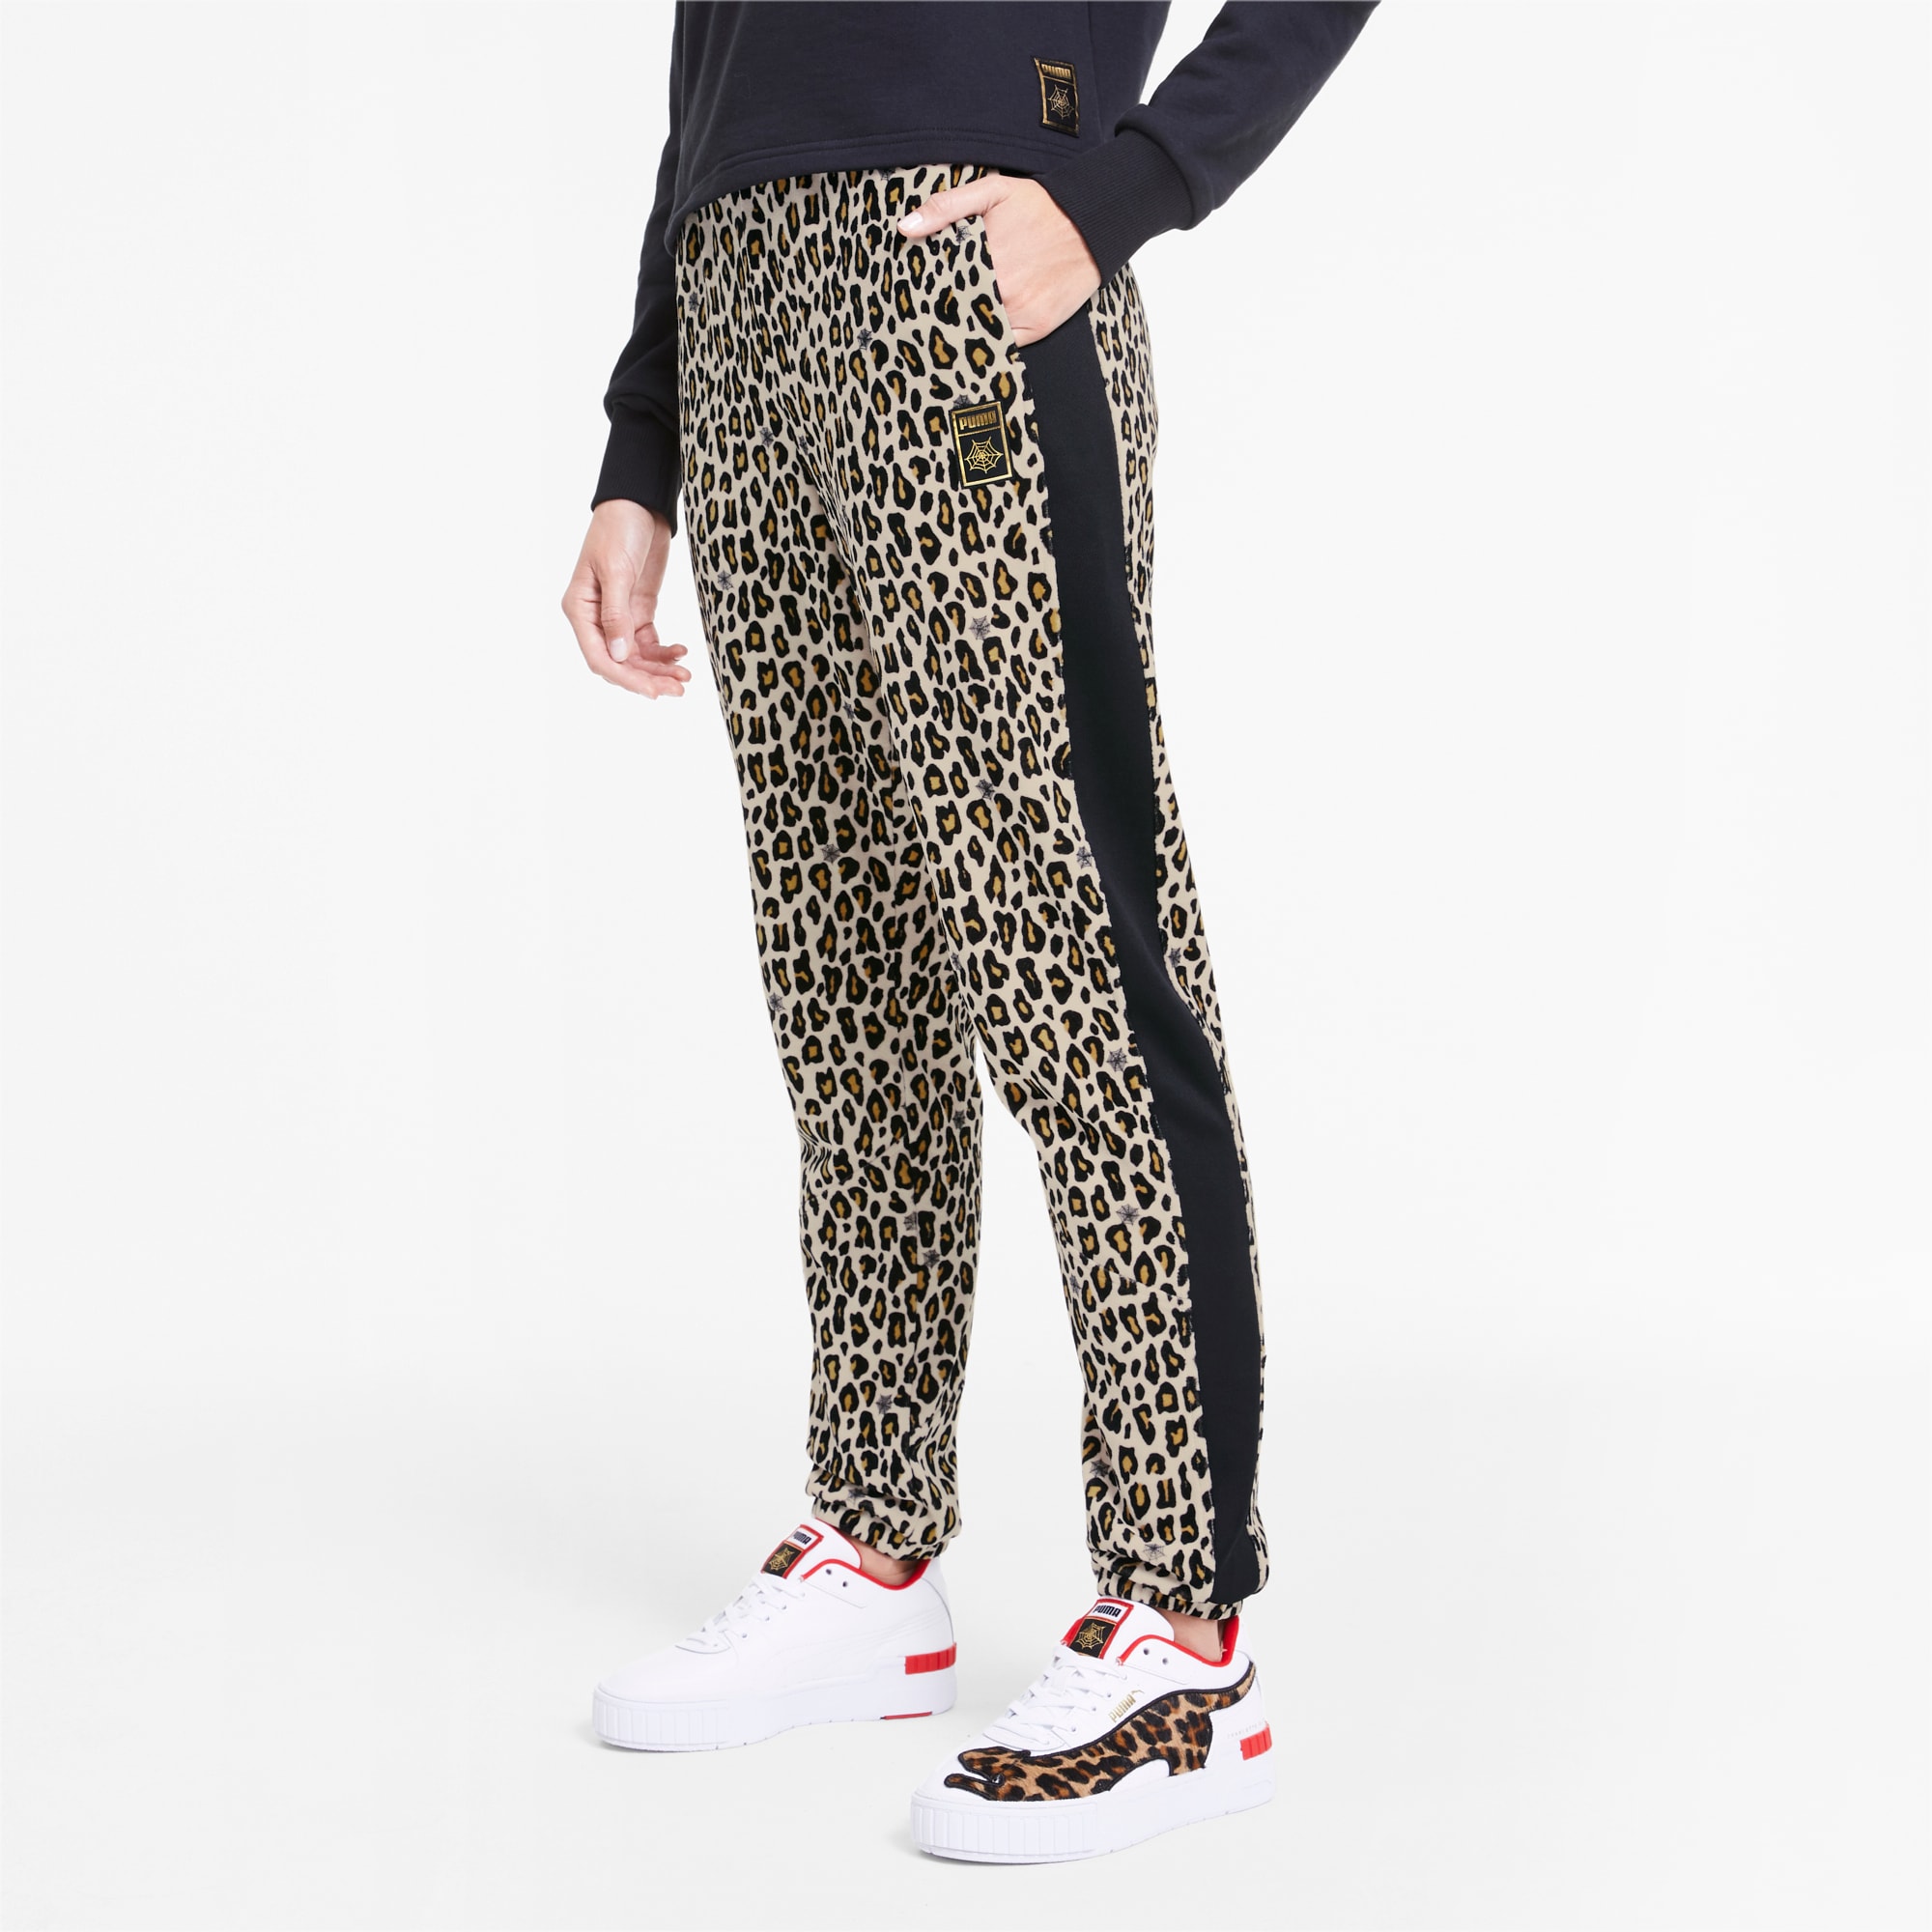 puma leopard leggings